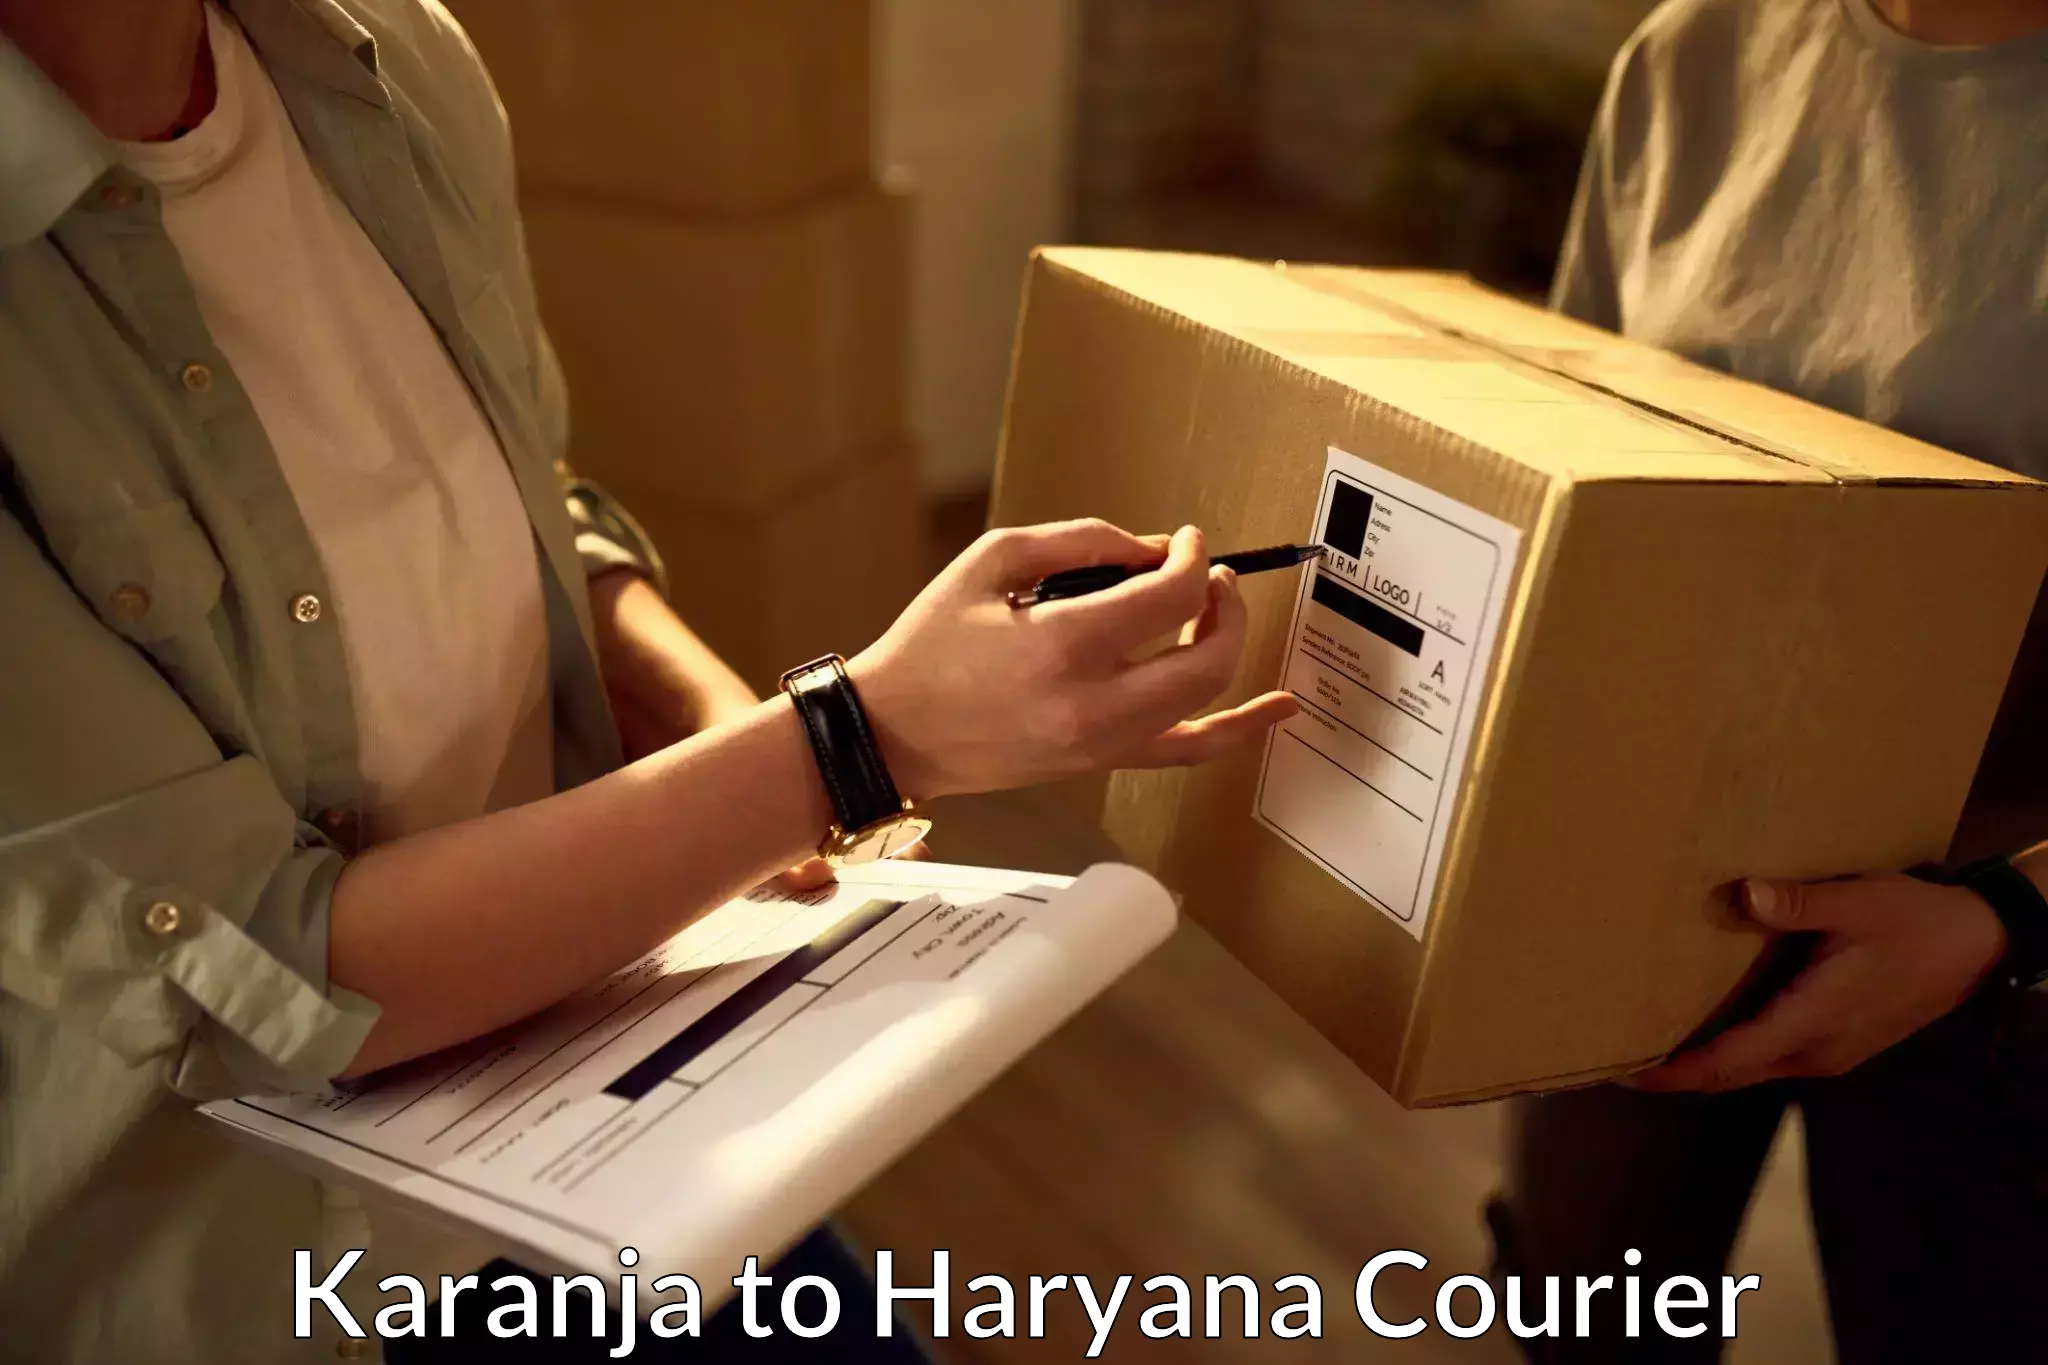 Express delivery network Karanja to Haryana